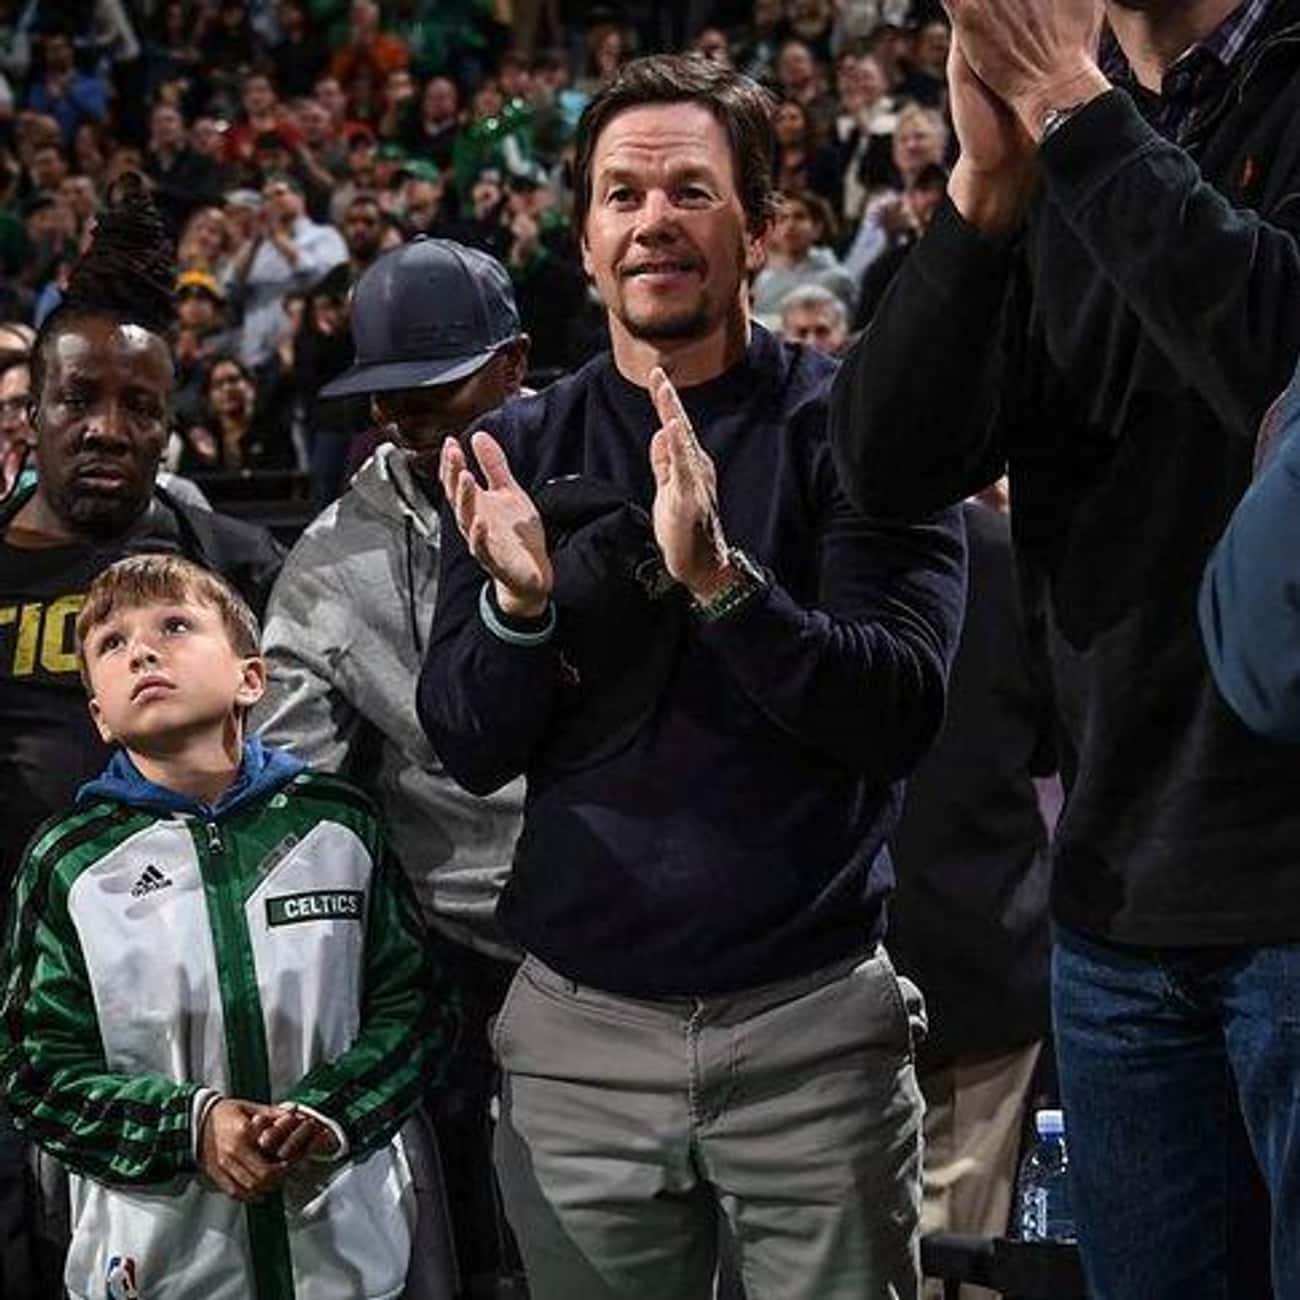 Celebrity Celtics Fans Celebrities at Boston Celtics Games